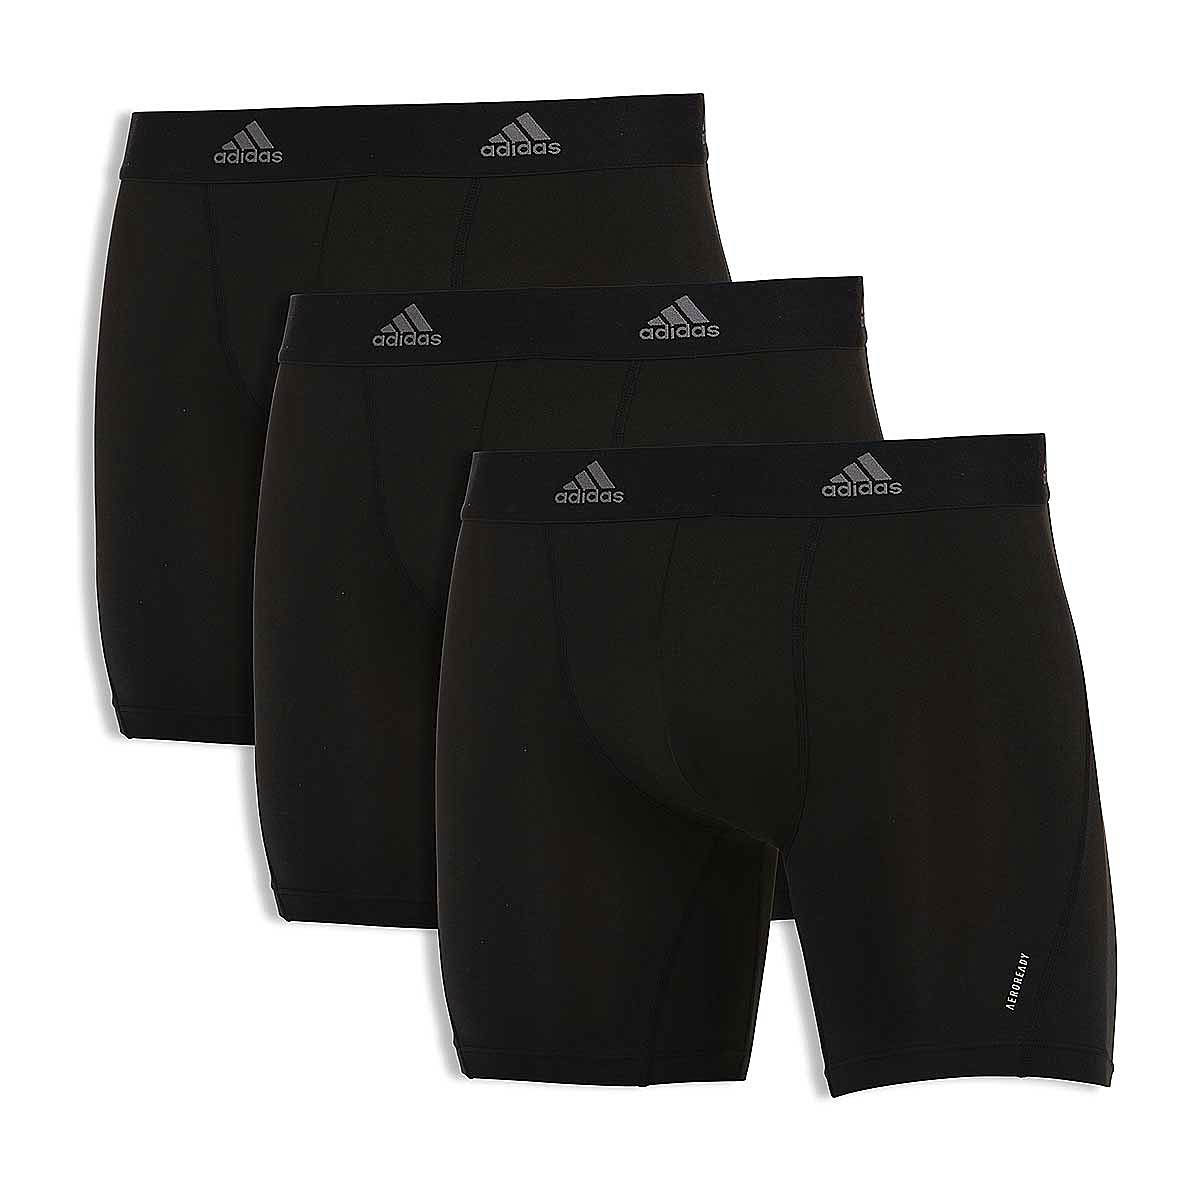 Adidas Underwear Boxer Brief (3Pk), Black